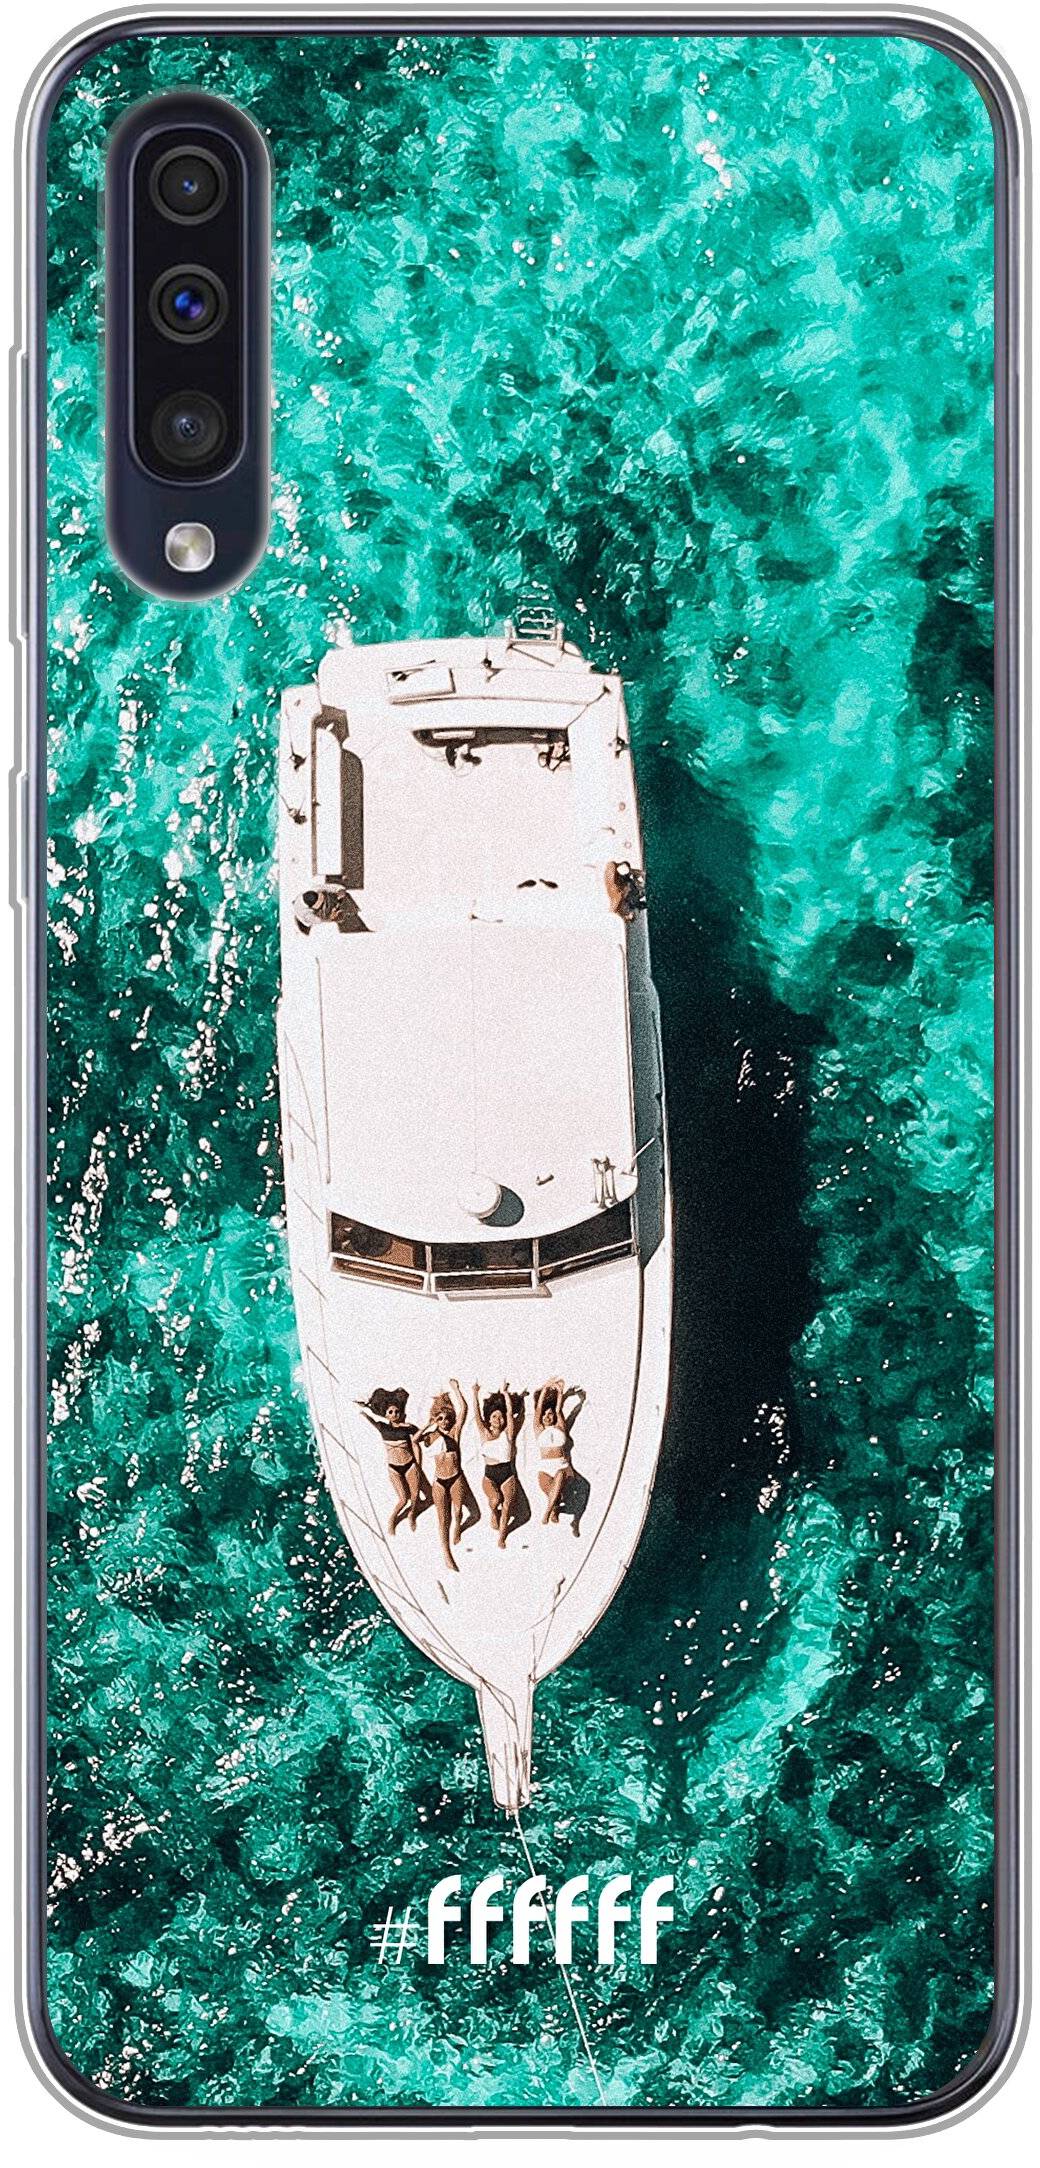 Yacht Life Galaxy A30s